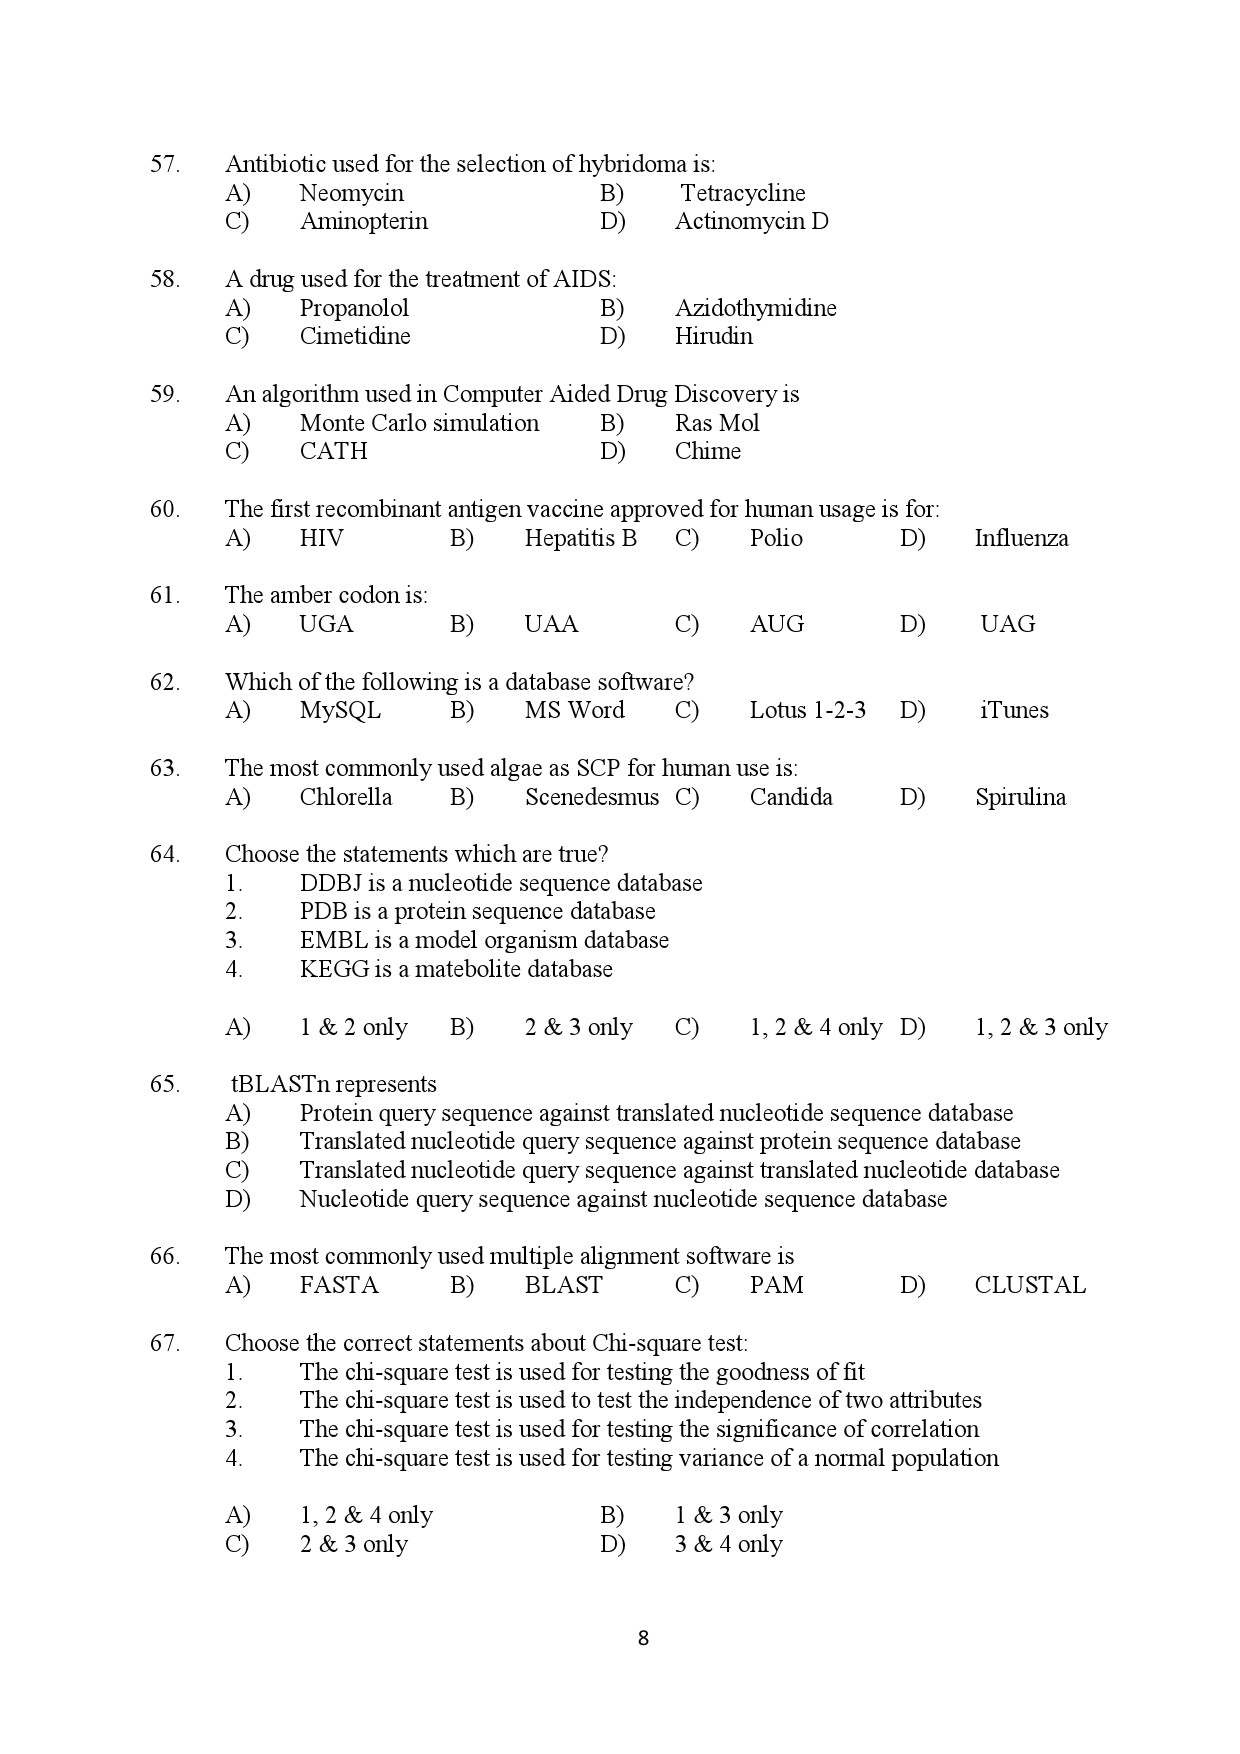 Kerala SET Biotechnology Exam Question Paper February 2020 8